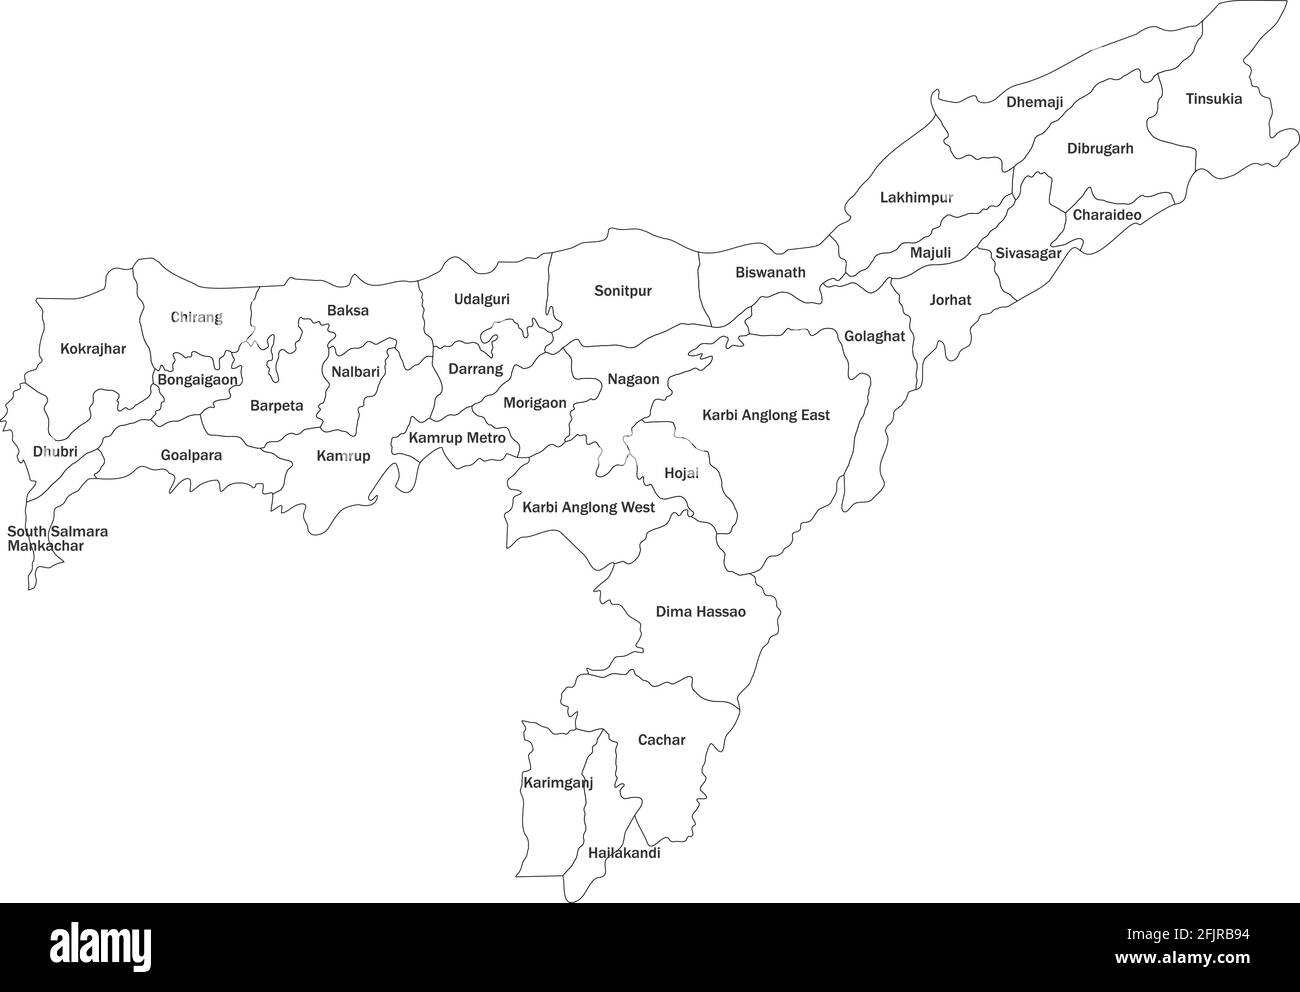 How to draw Assam map easy SAAD - YouTube-saigonsouth.com.vn